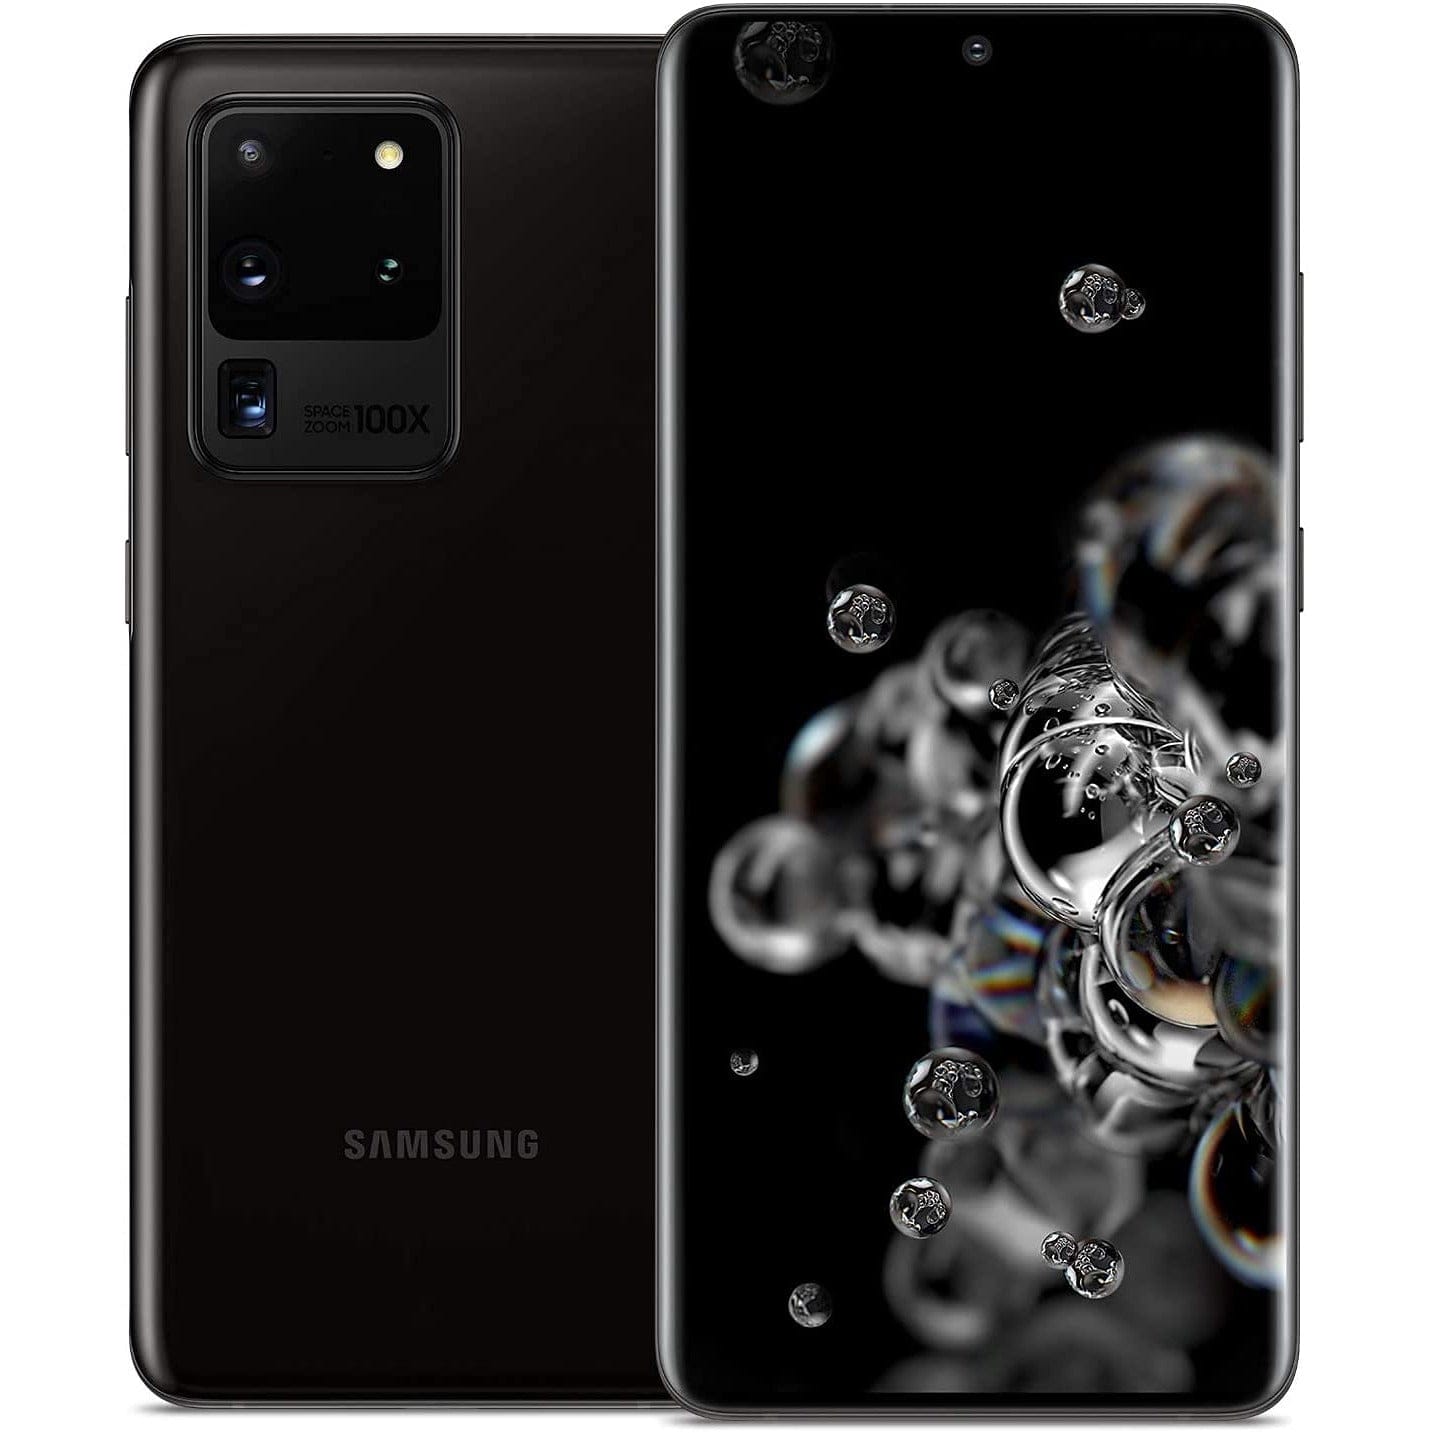 SAMSUNG Galaxy S20 Ultra 5G SM-G988U 128GB, Cosmic Black GSM